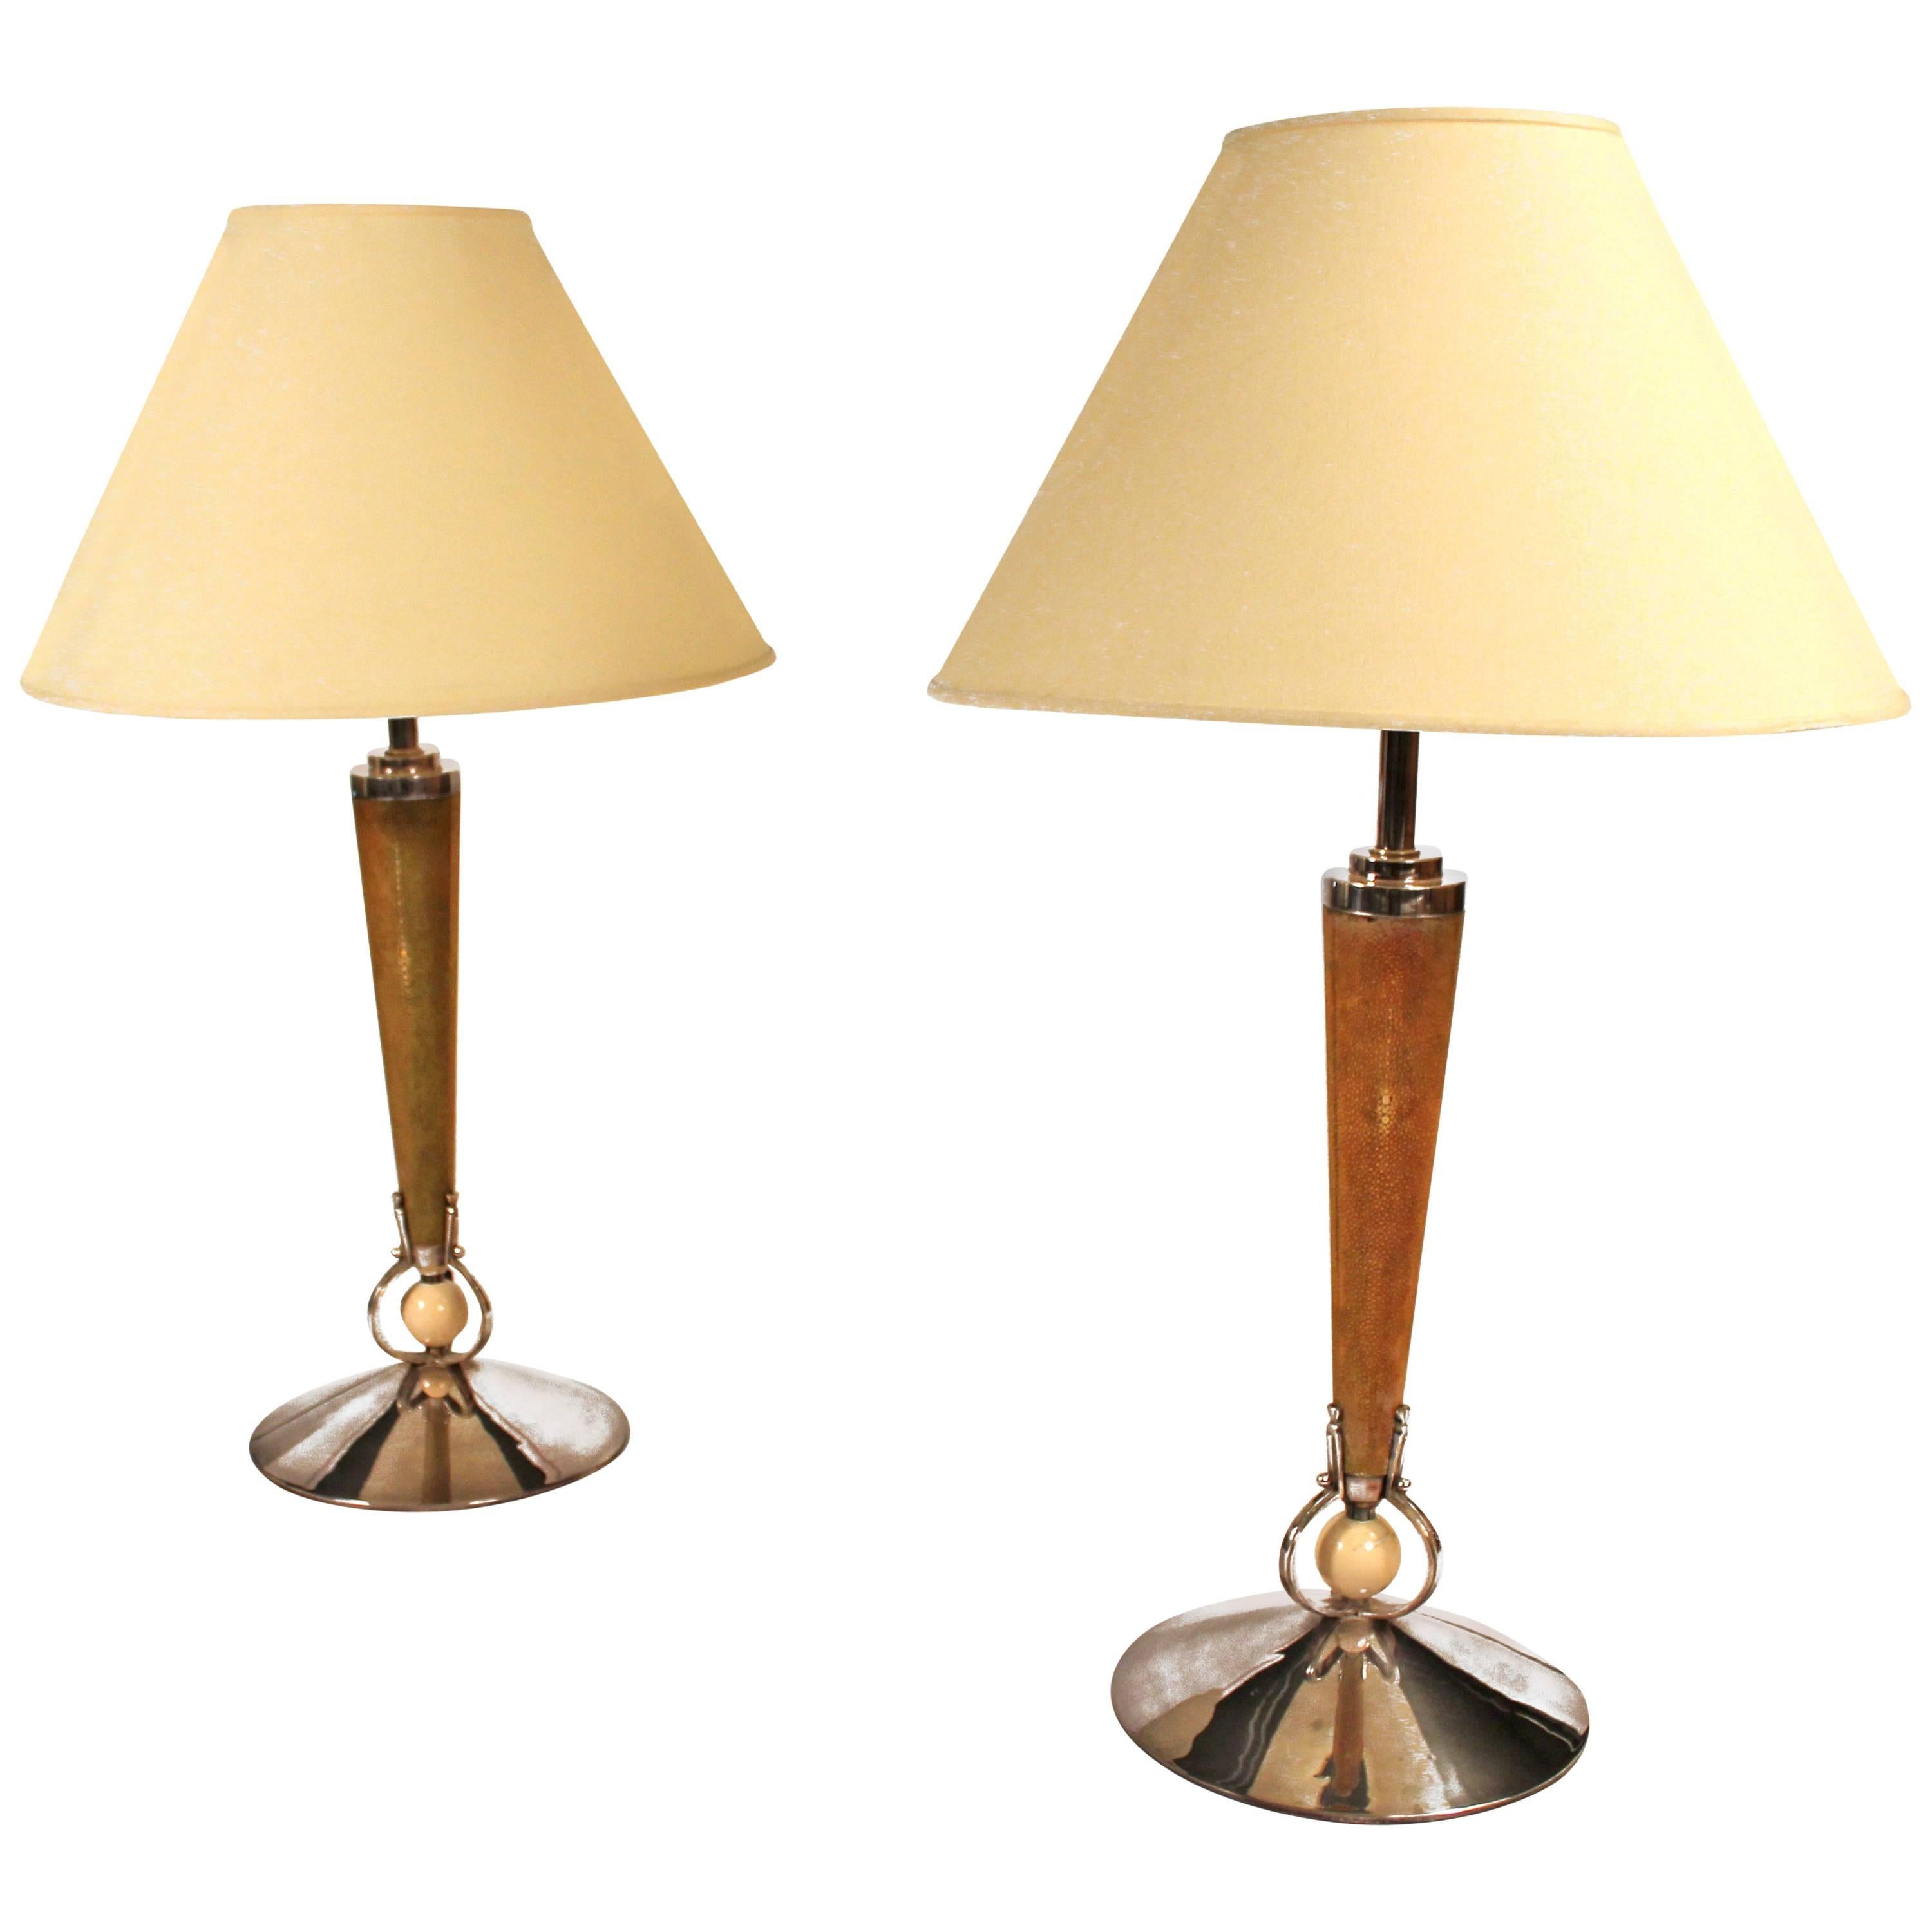 Pair of Monumental Shagreen Art Deco Lamps by Petitot Paris